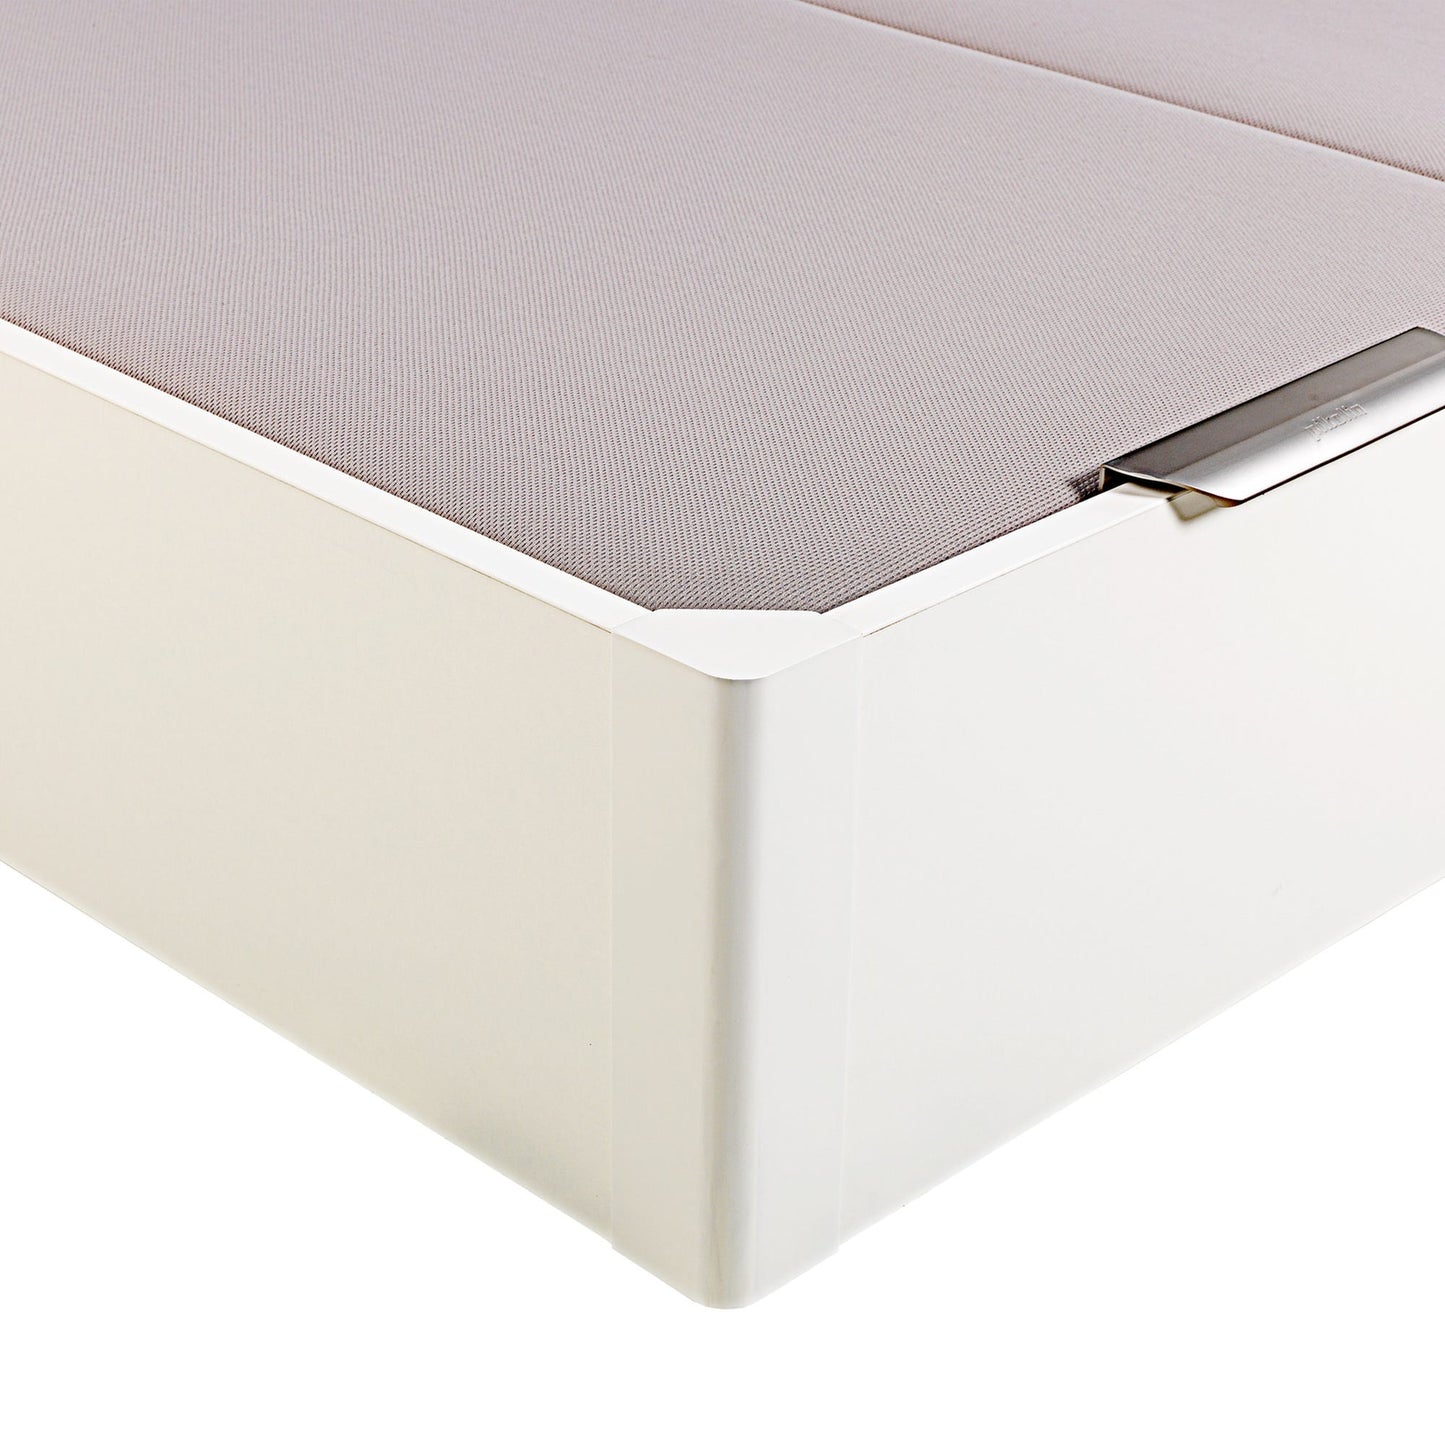 Canapé abatible de madera de alta capacidad tapa doble de color blanco - DESIGN - 180x190